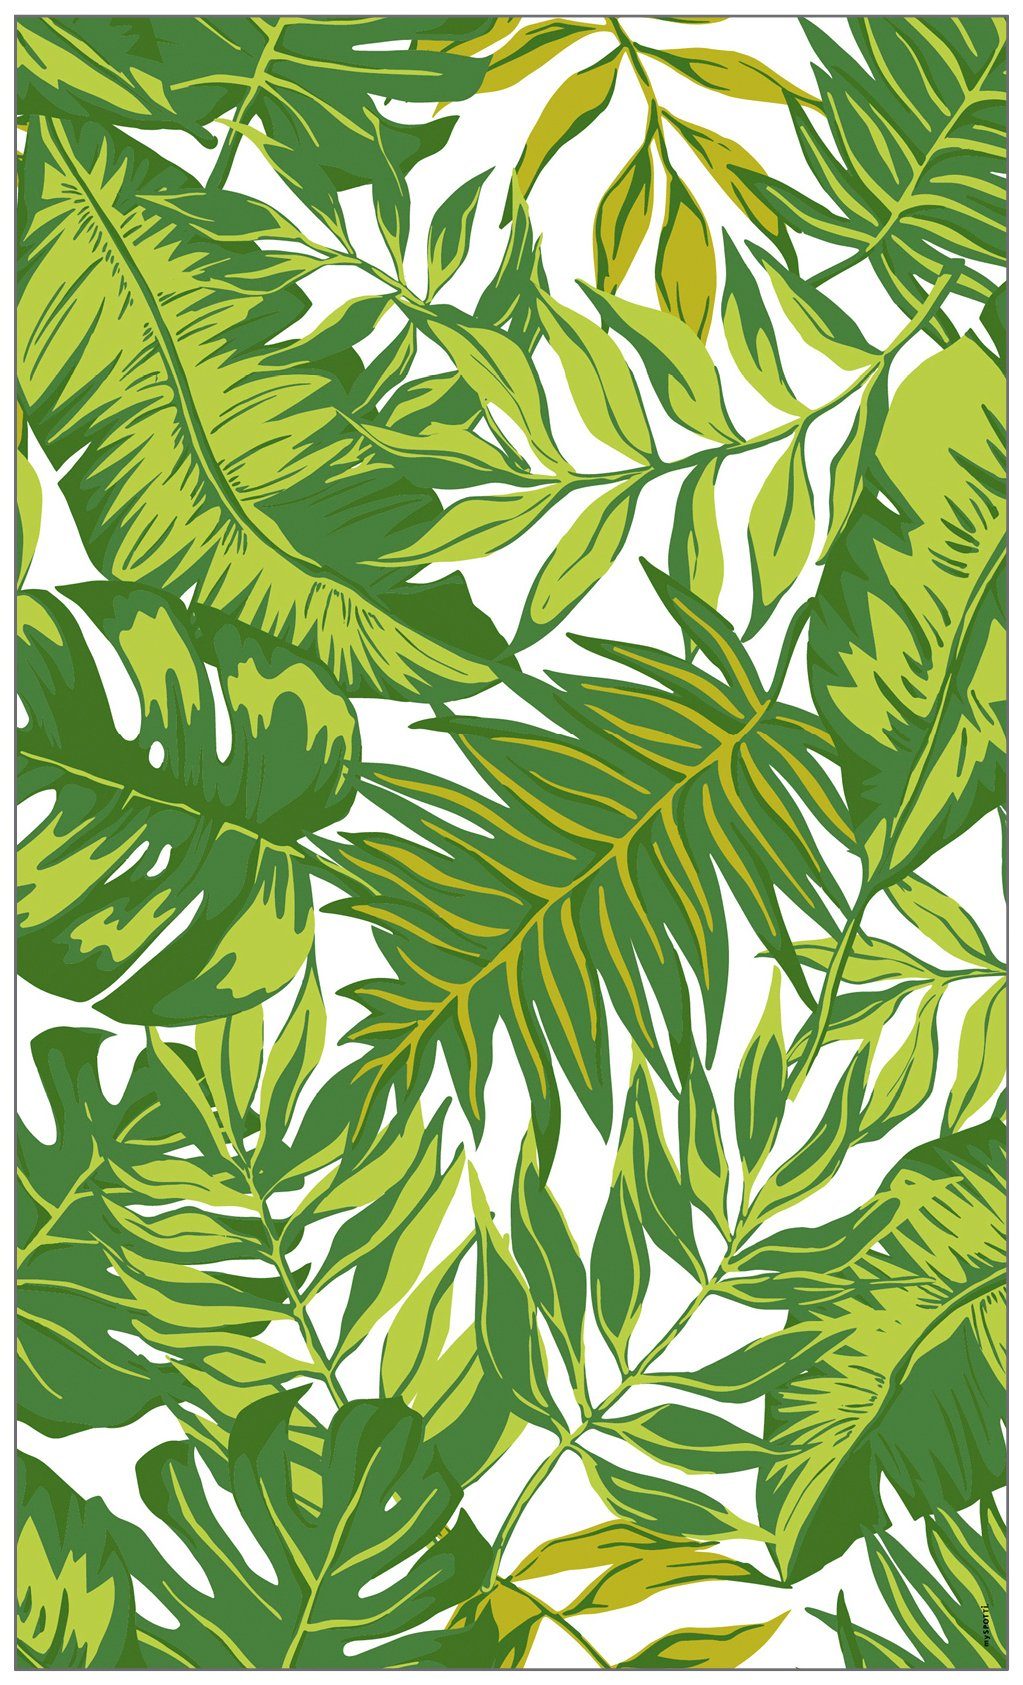 Fensterfolie Look Palm Leaves green, MySpotti, halbtransparent, glatt, 60 x 100 cm, statisch haftend | Fensterfolien